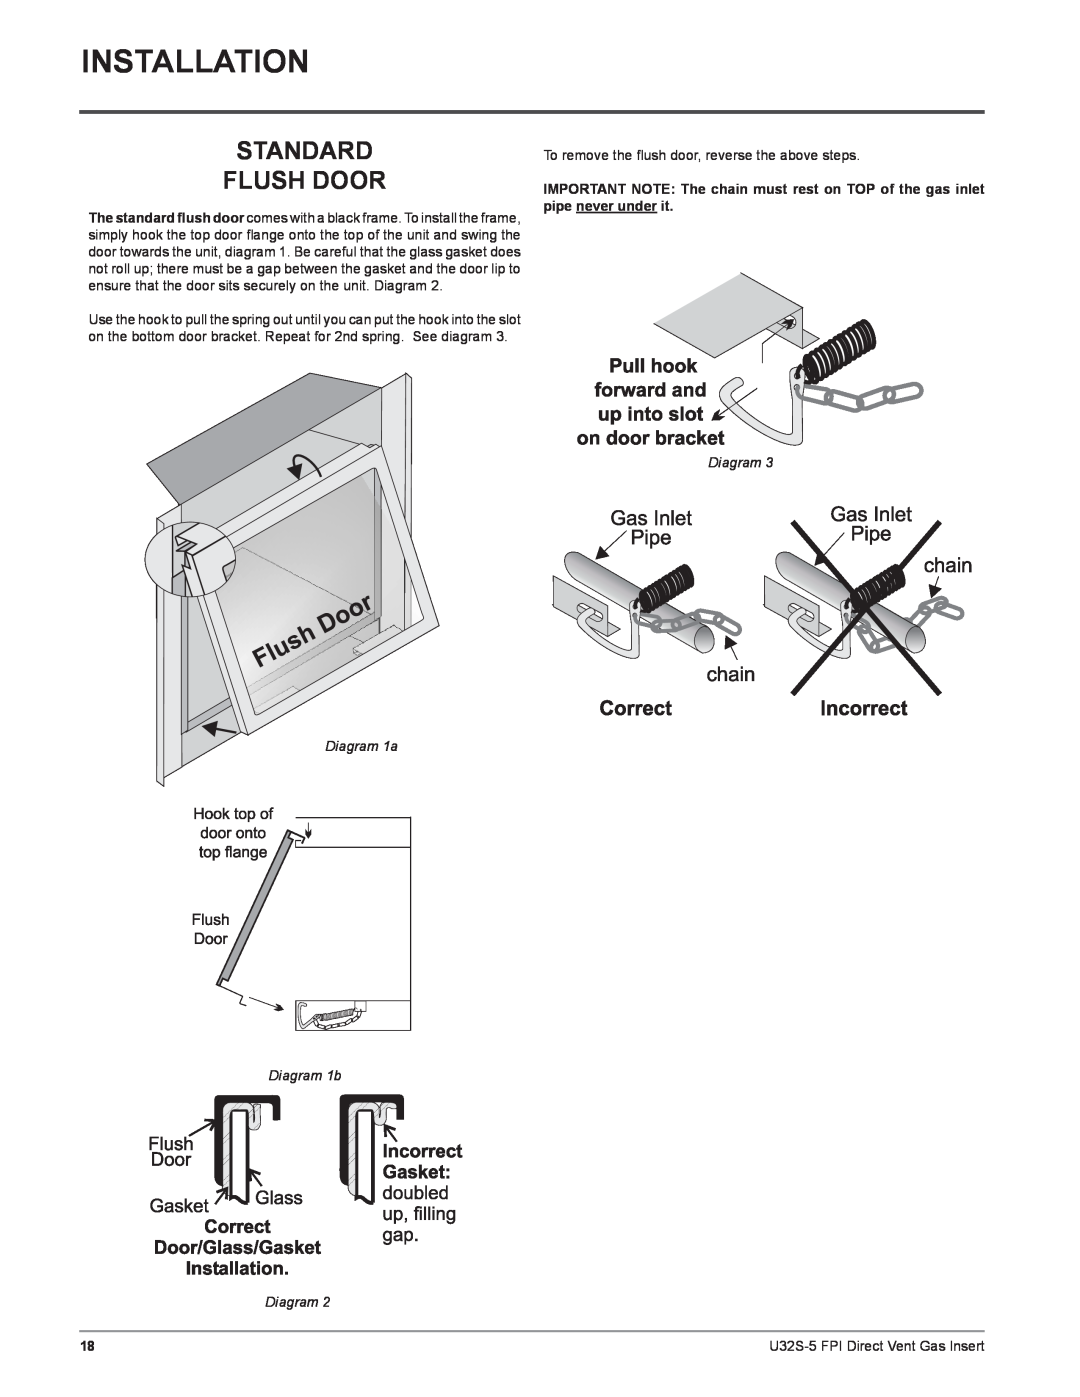 Regency U32S-NG5, U32S-LP5 installation manual Installation, Standard Flush Door, Diagram Diagram 1a Diagram 1b Diagram 